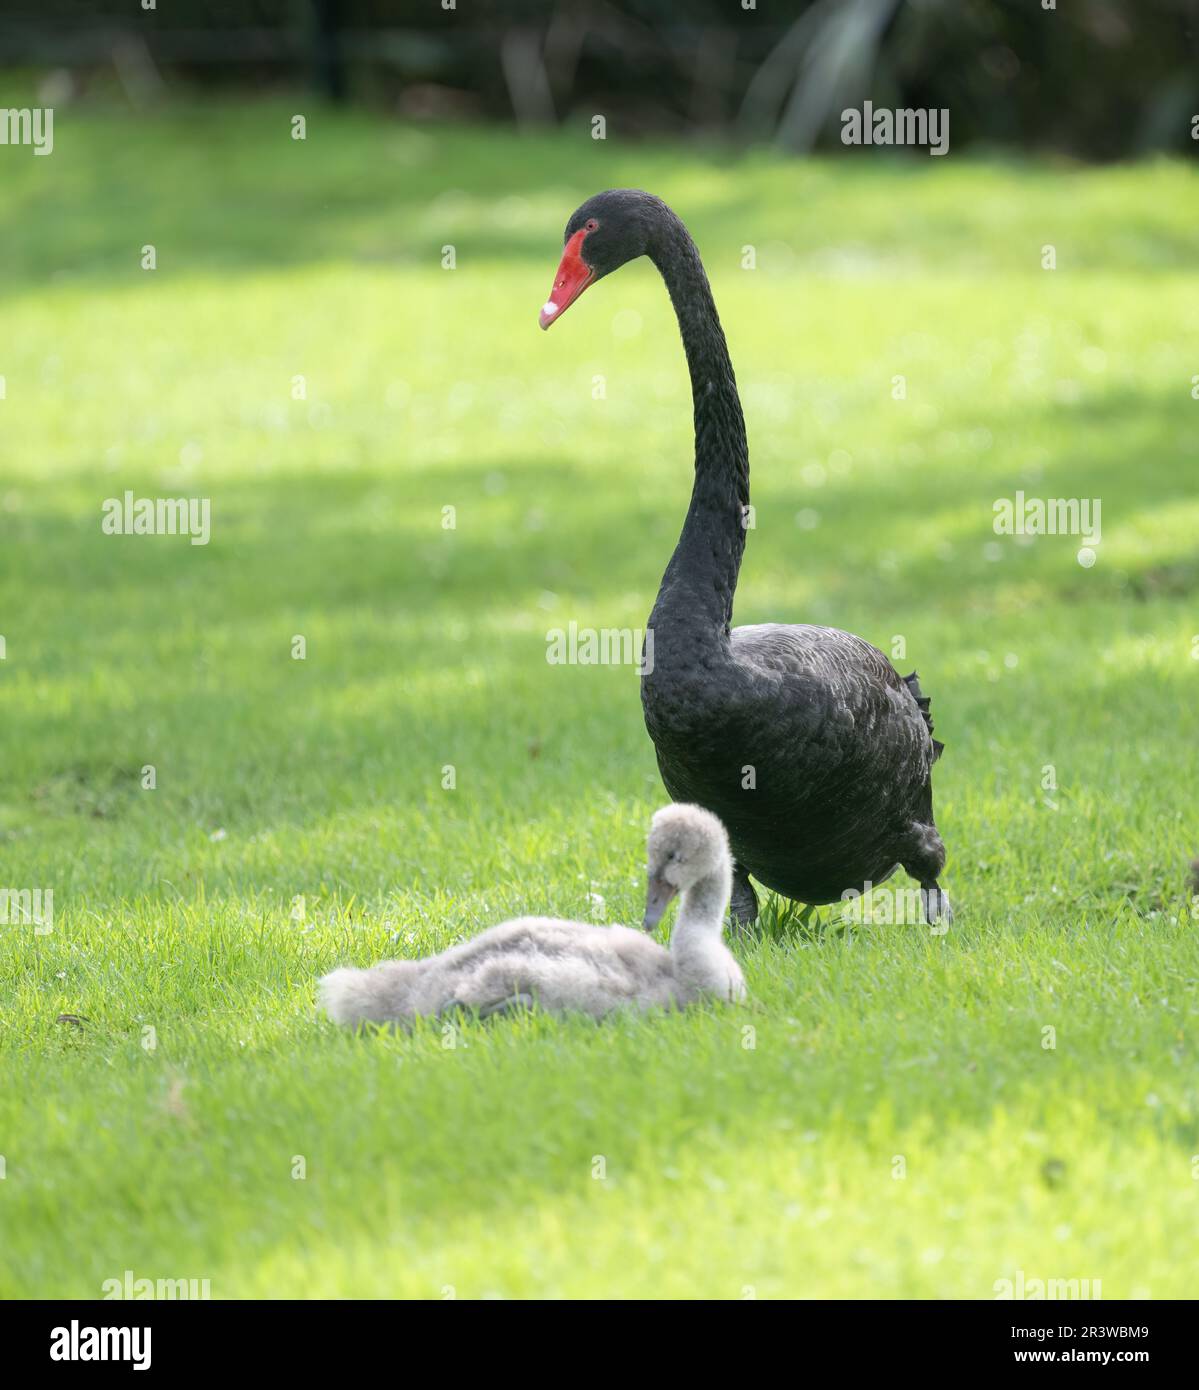 Black swan protecting her cygnet. Vertical format. Stock Photo